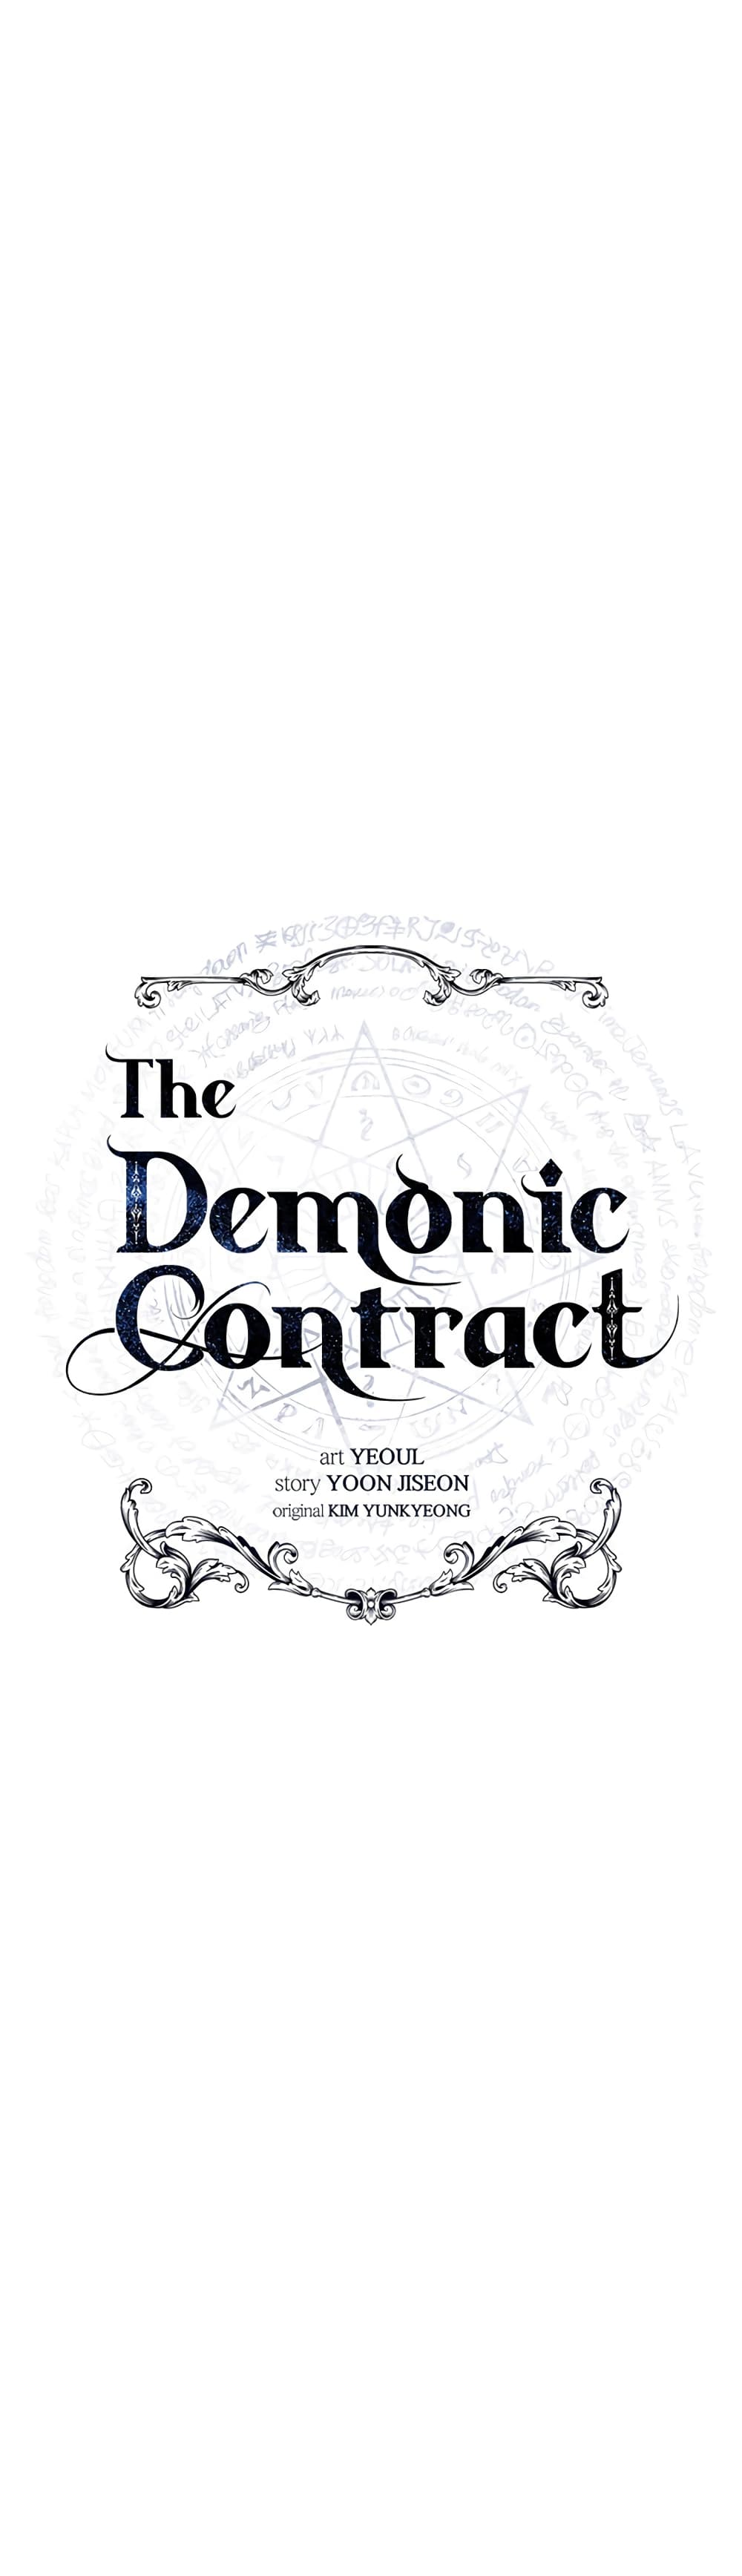 The Demonic Contract 46 08